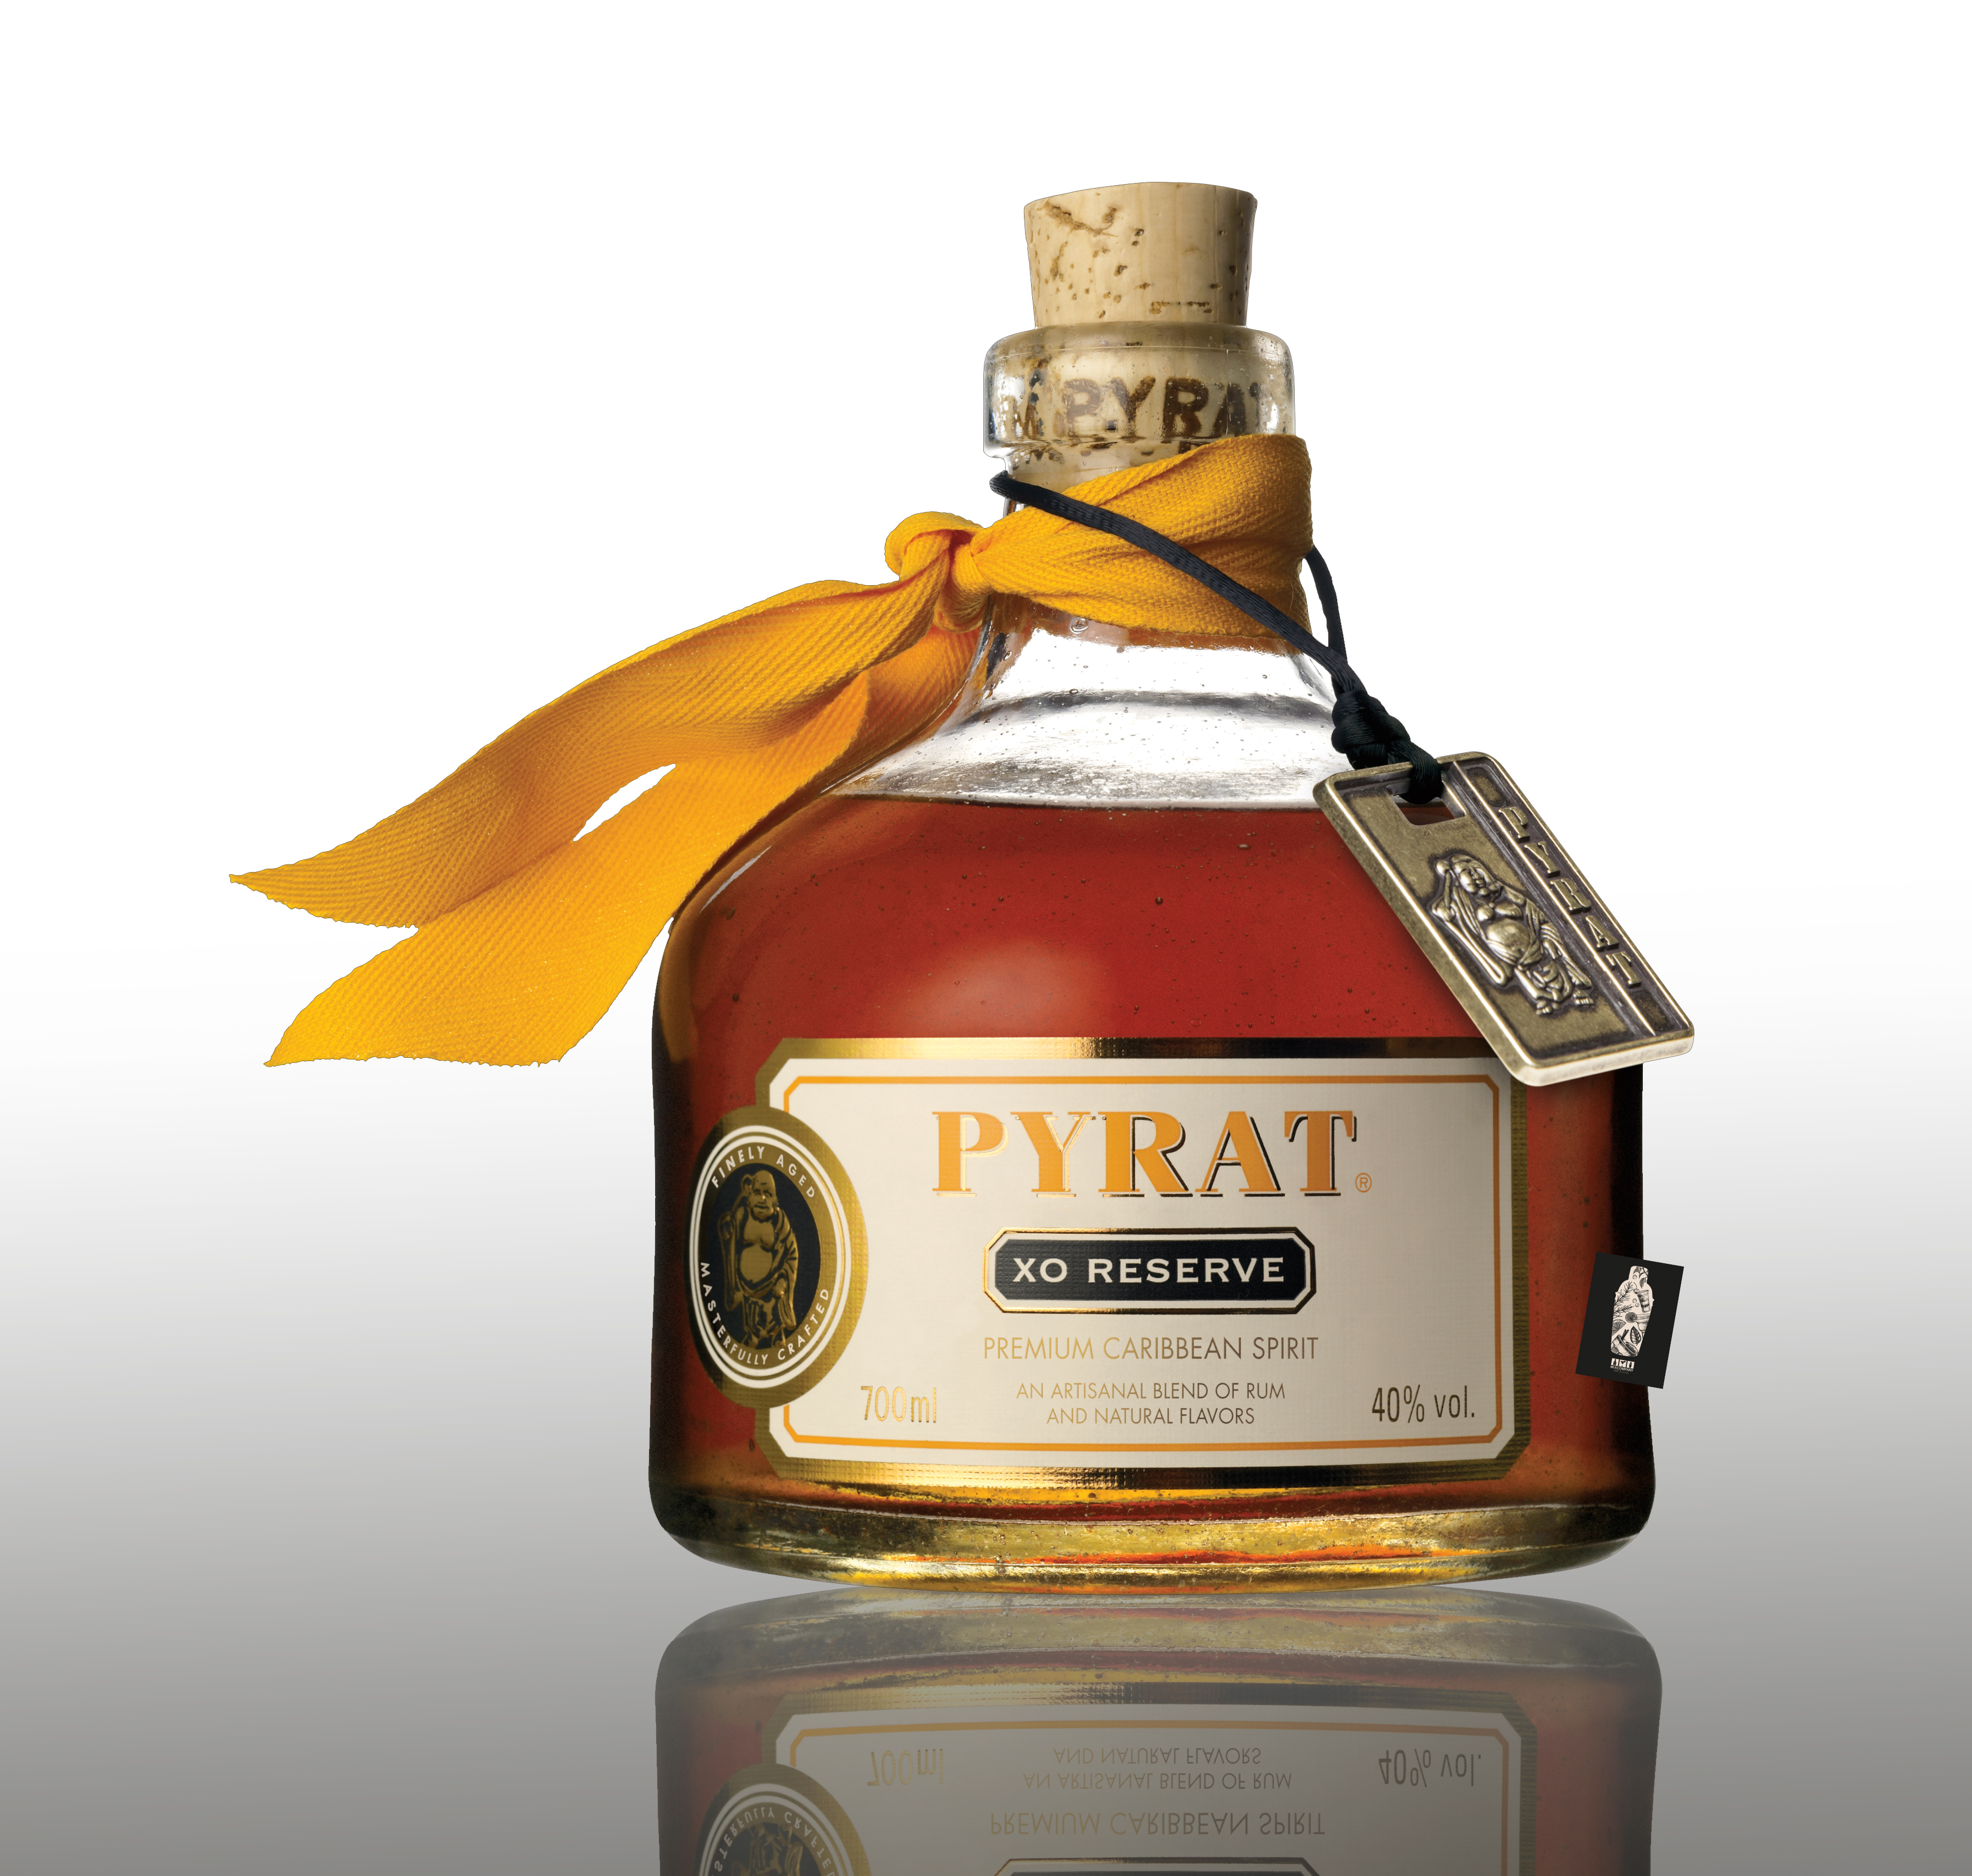 Pyrat XO RESERVE 0,7 (40% vol.) Premium Caribbean Spirit inkl. Mixcompany Postkarte- [Enthält Sulfite]